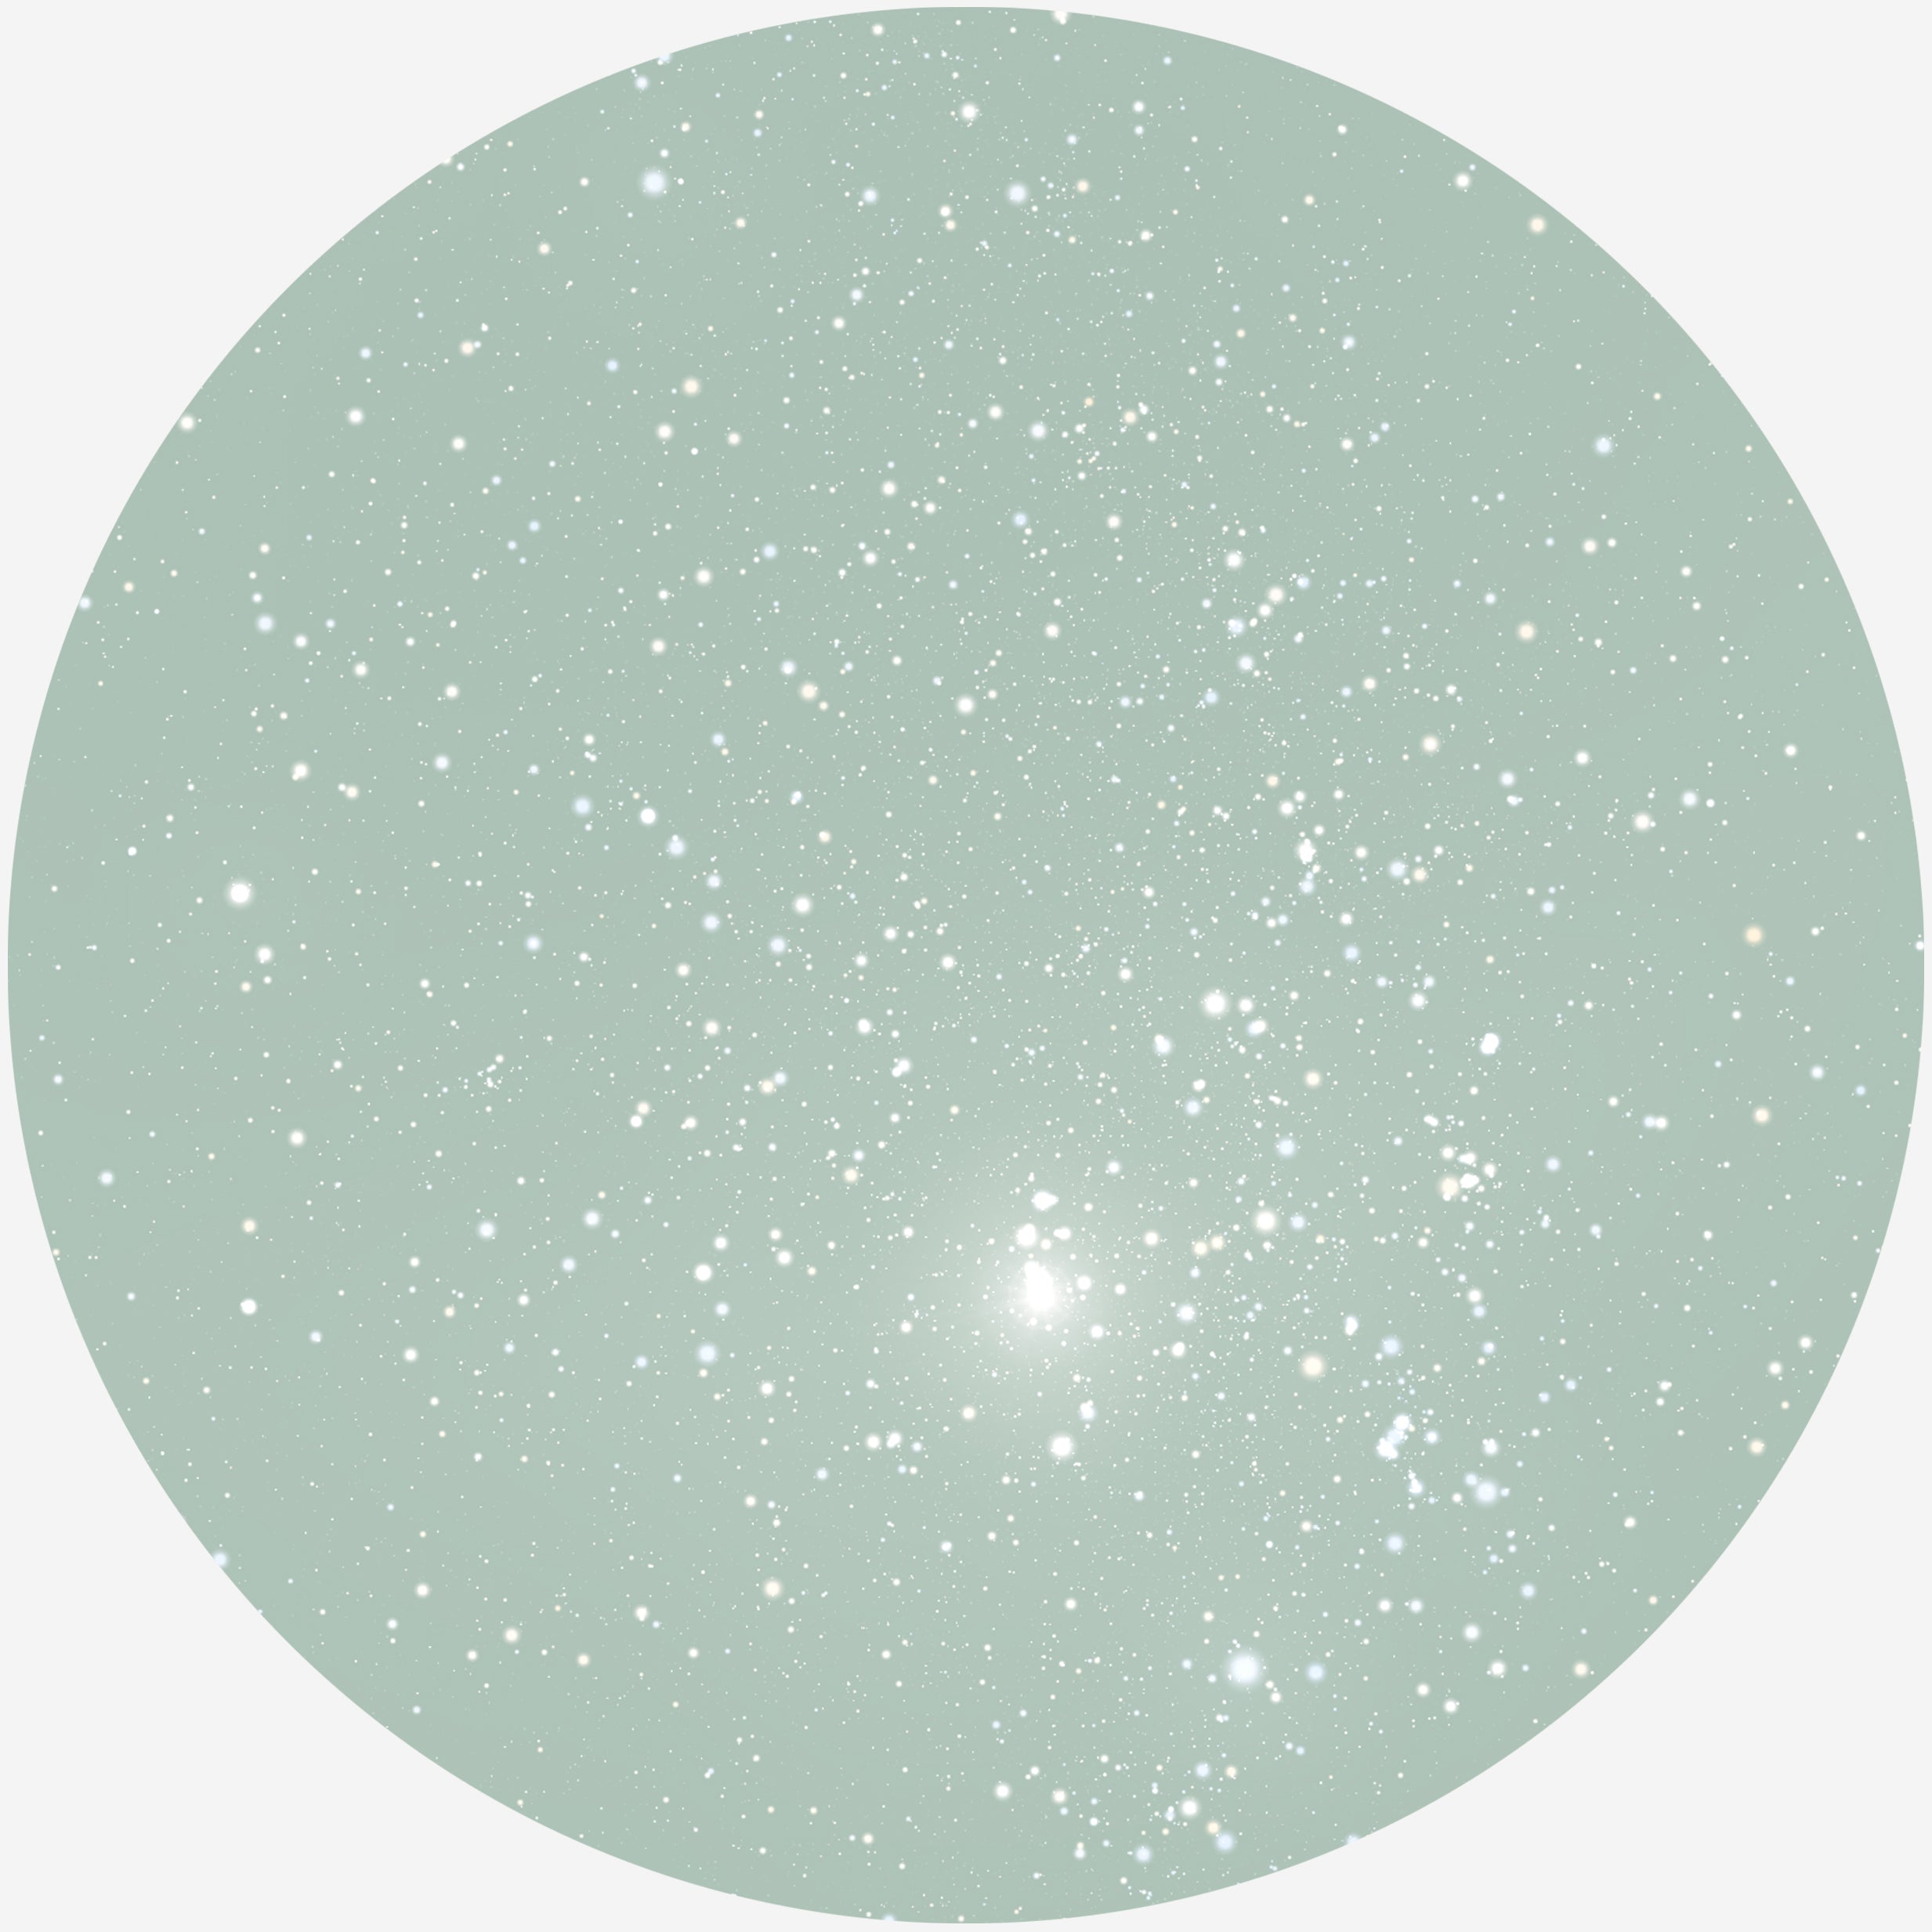 Se RUND PLAKAT MED PERSONLIG STJERNEHIMMEL (LYSEGRØN) - 30 cm / Klar stjernehimmel hos KISPUS